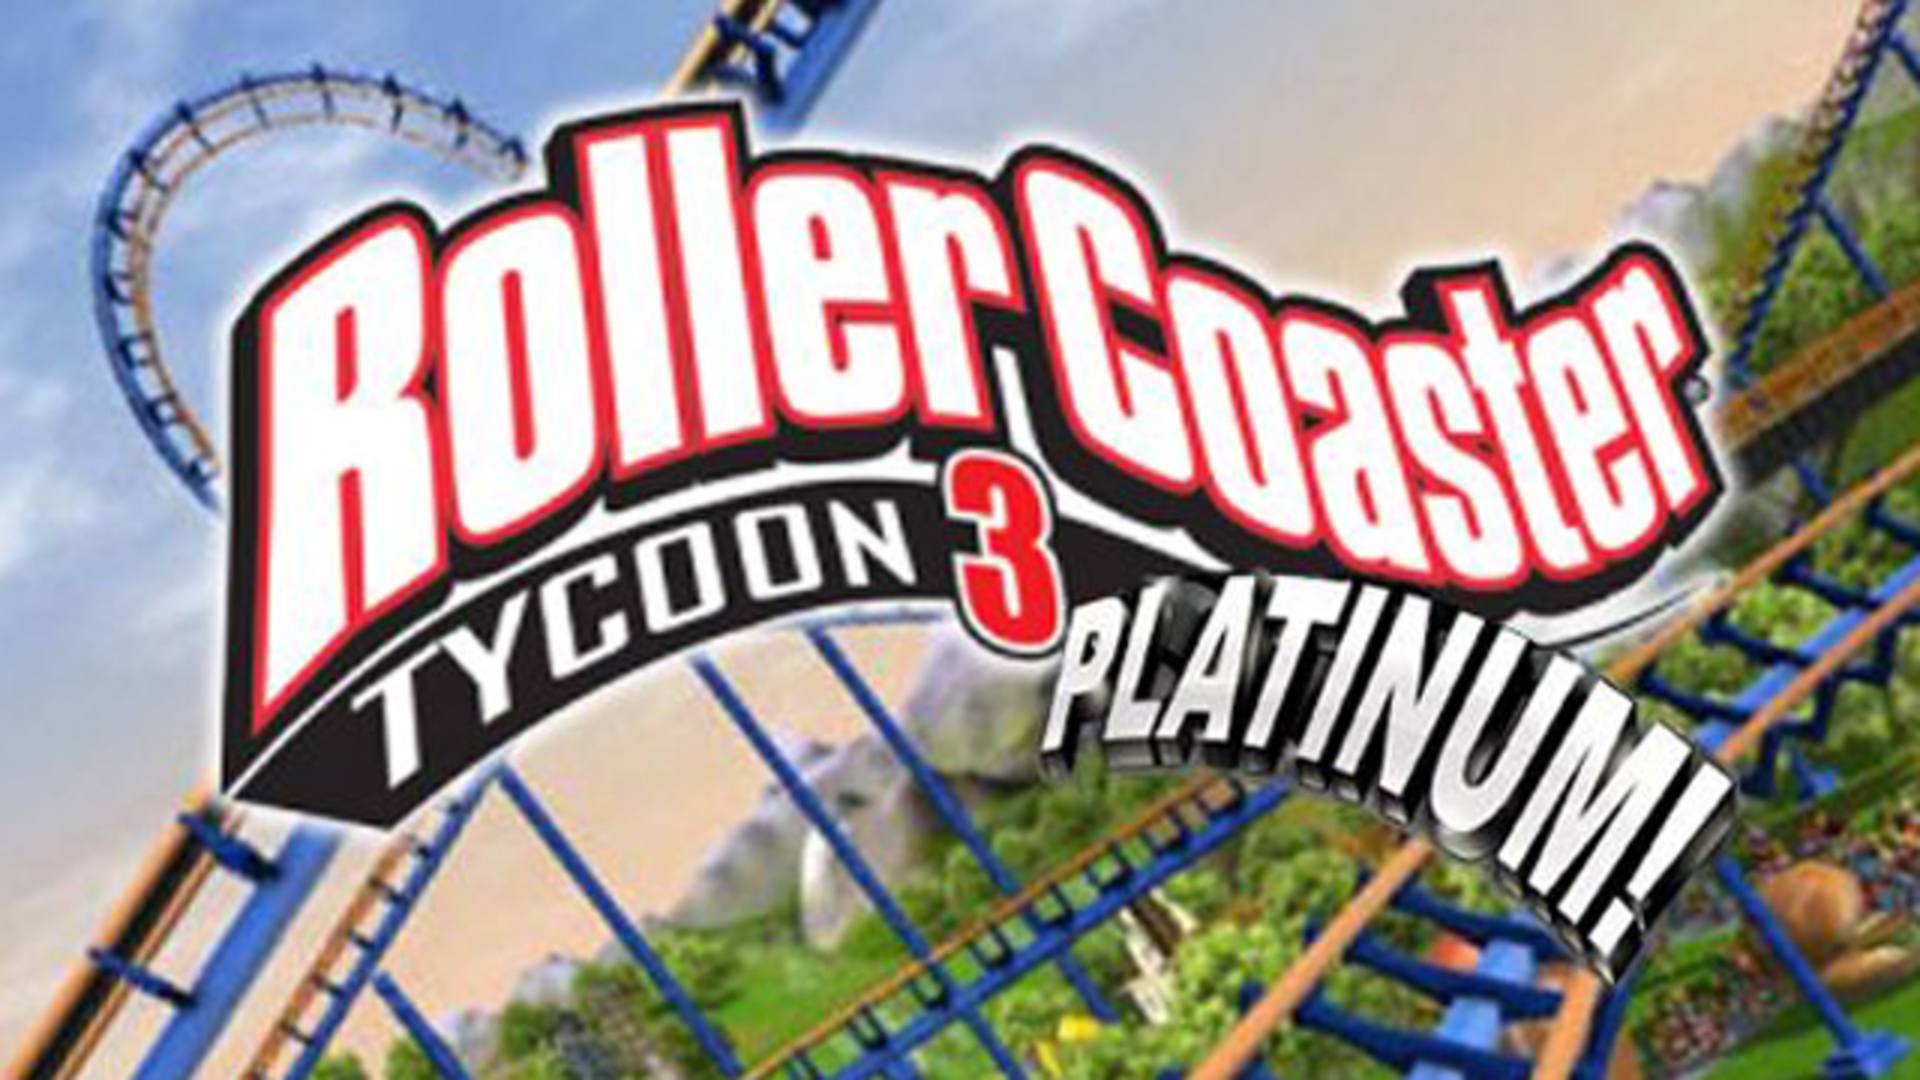 RollerCoaster Tycoon 3 Platinum. Mac PC Steam Game